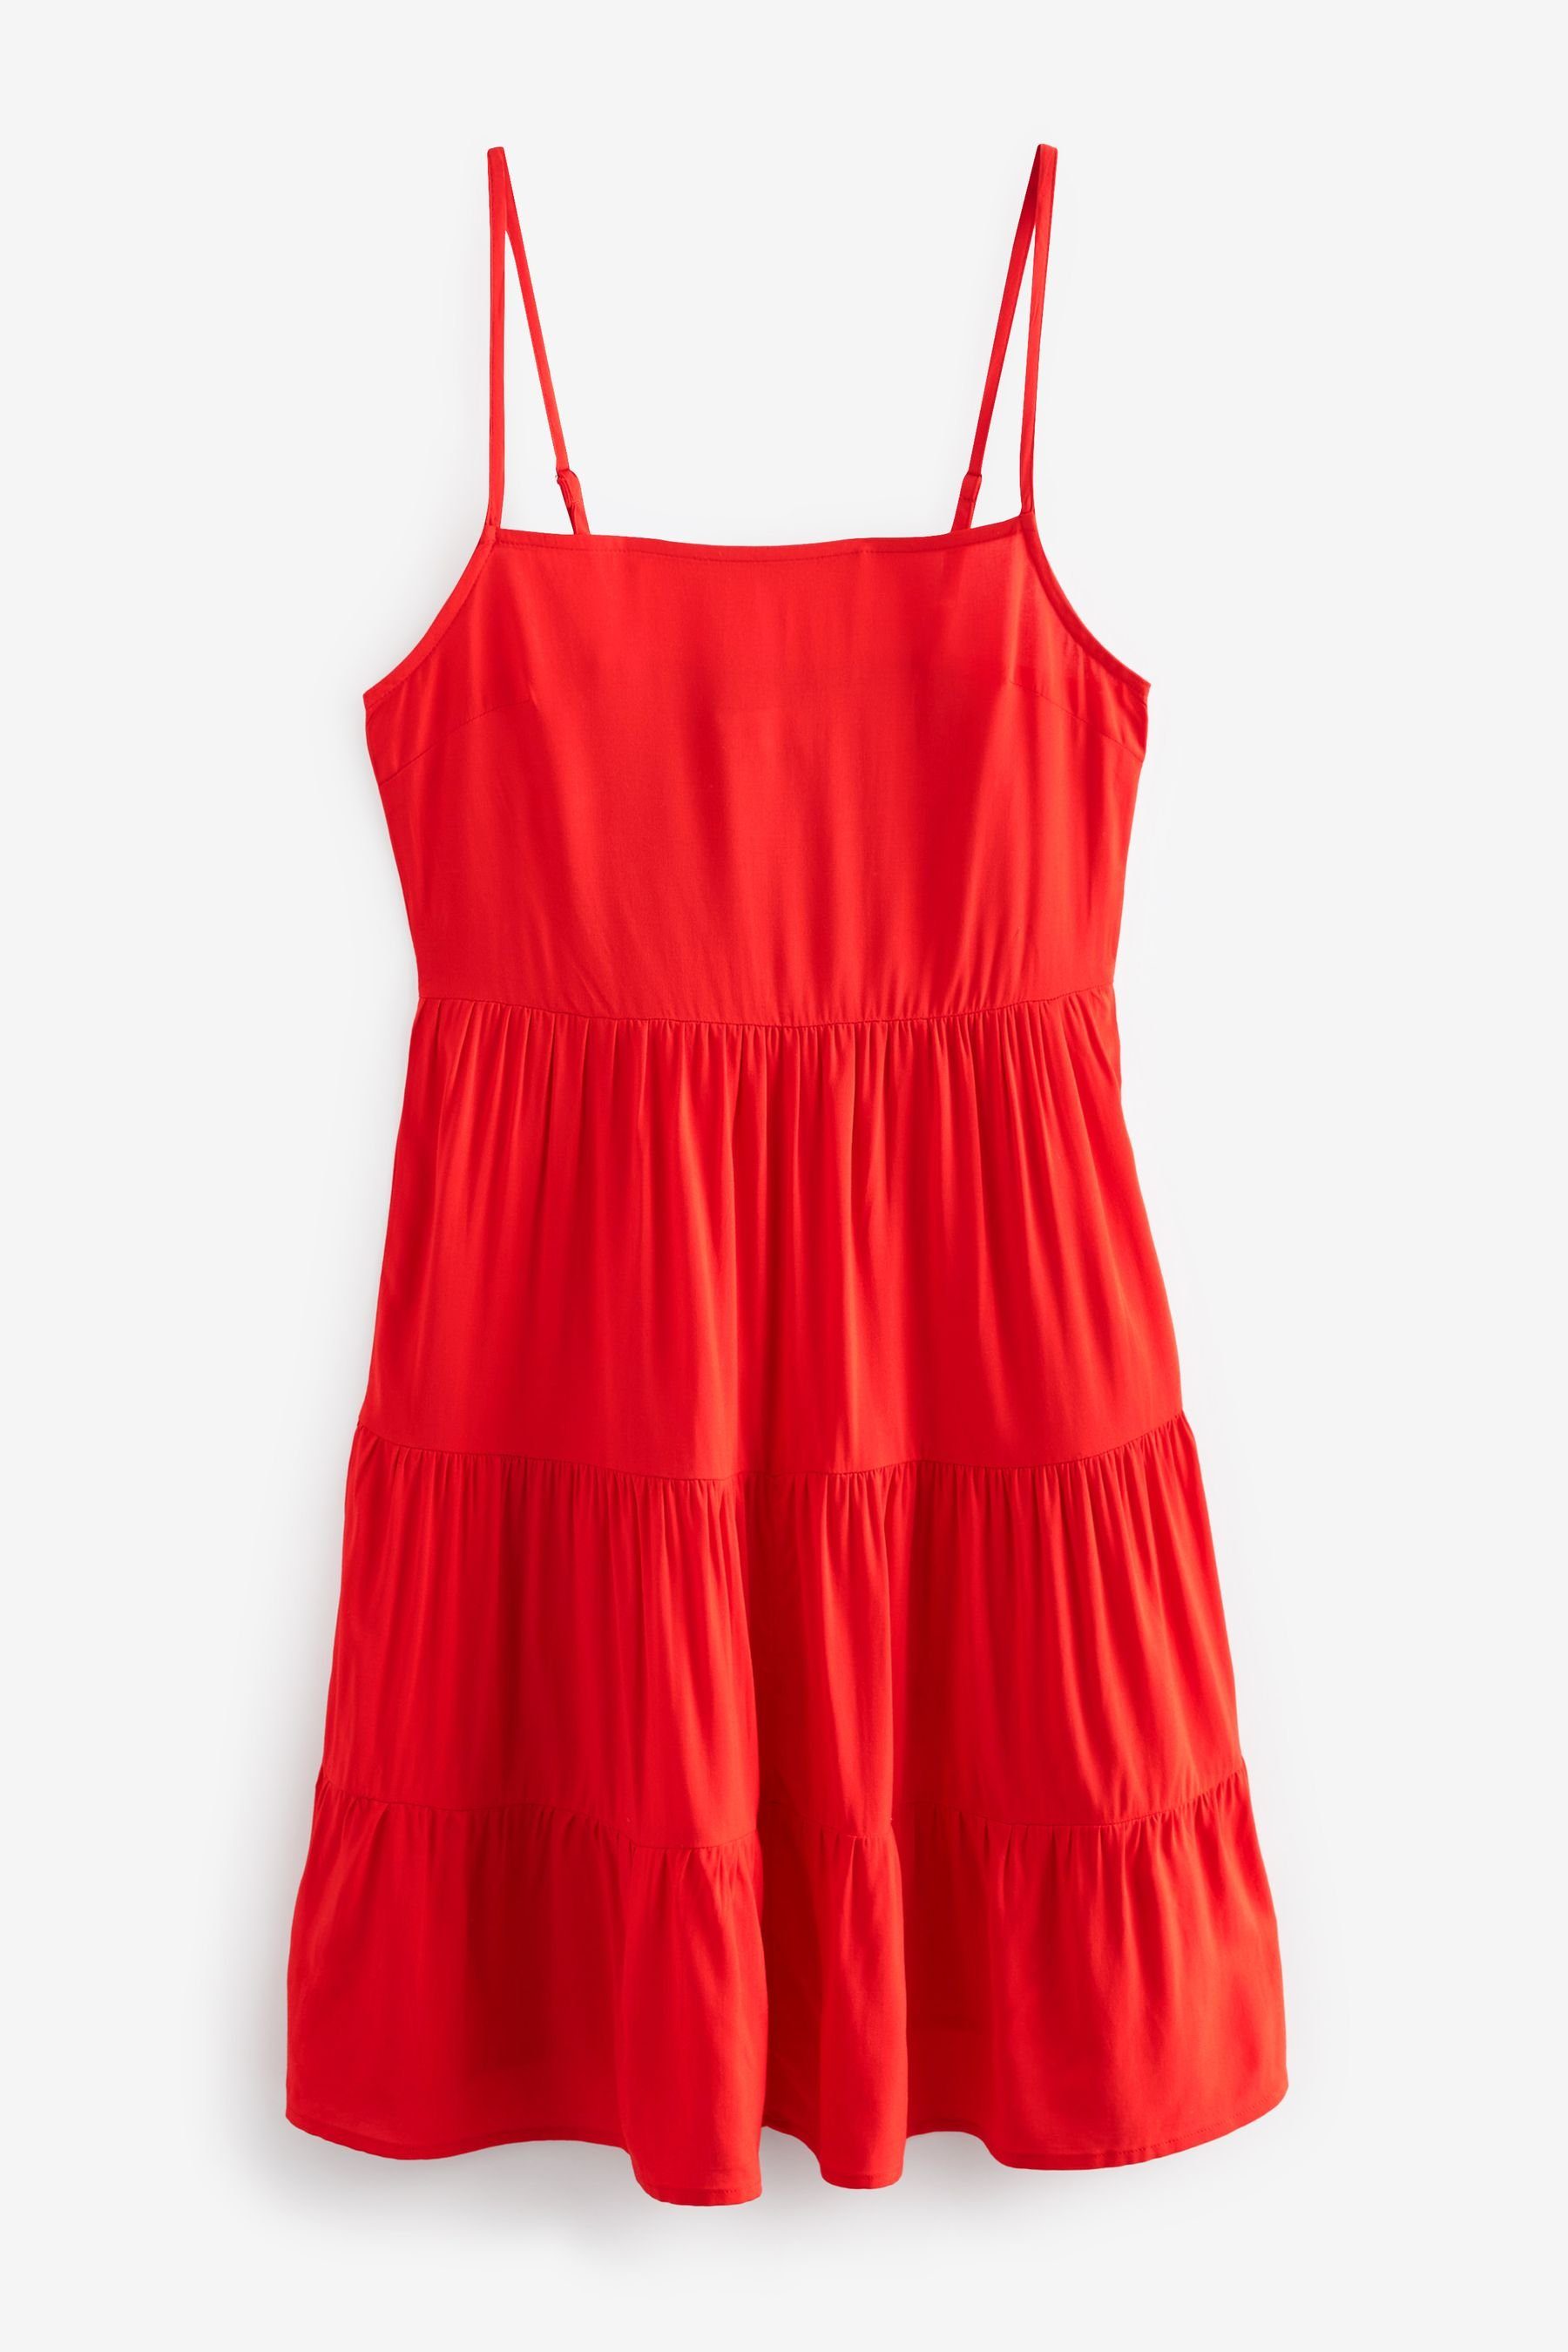 Next Sommerkleid (1-tlg) Minikleid Spaghettiträgern Red mit Gestuftes